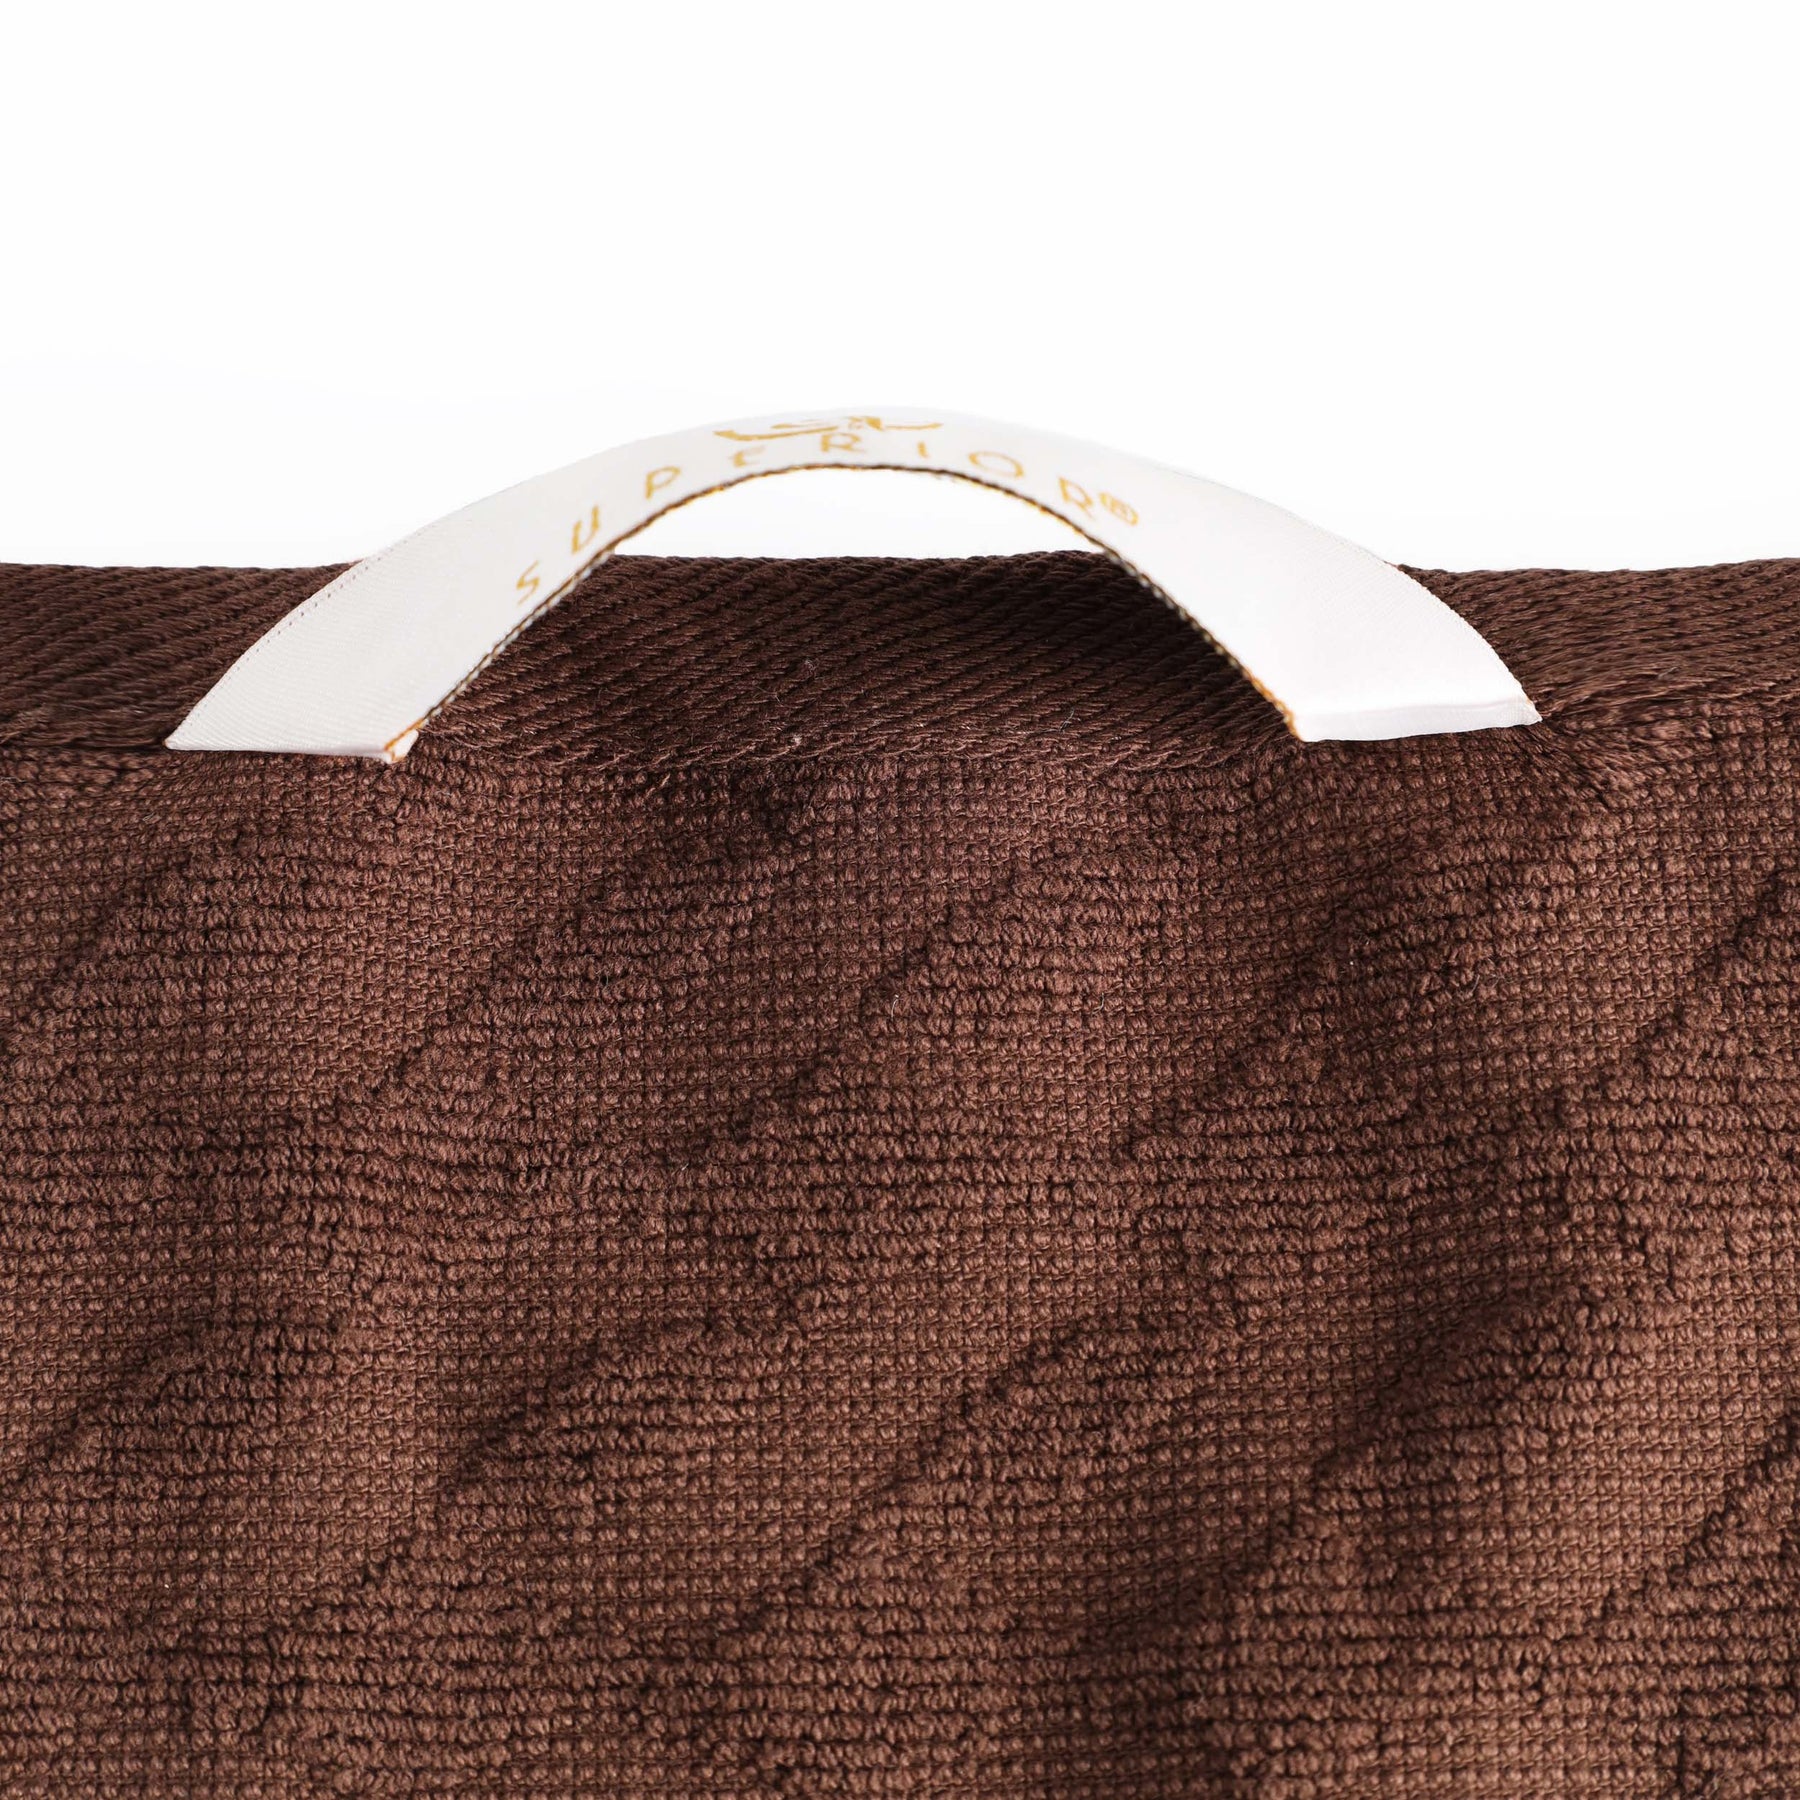 Premium Turkish Cotton Jacquard Herringbone and Solid 12-Piece Face Towel/ Washcloth Set -  Chocolate